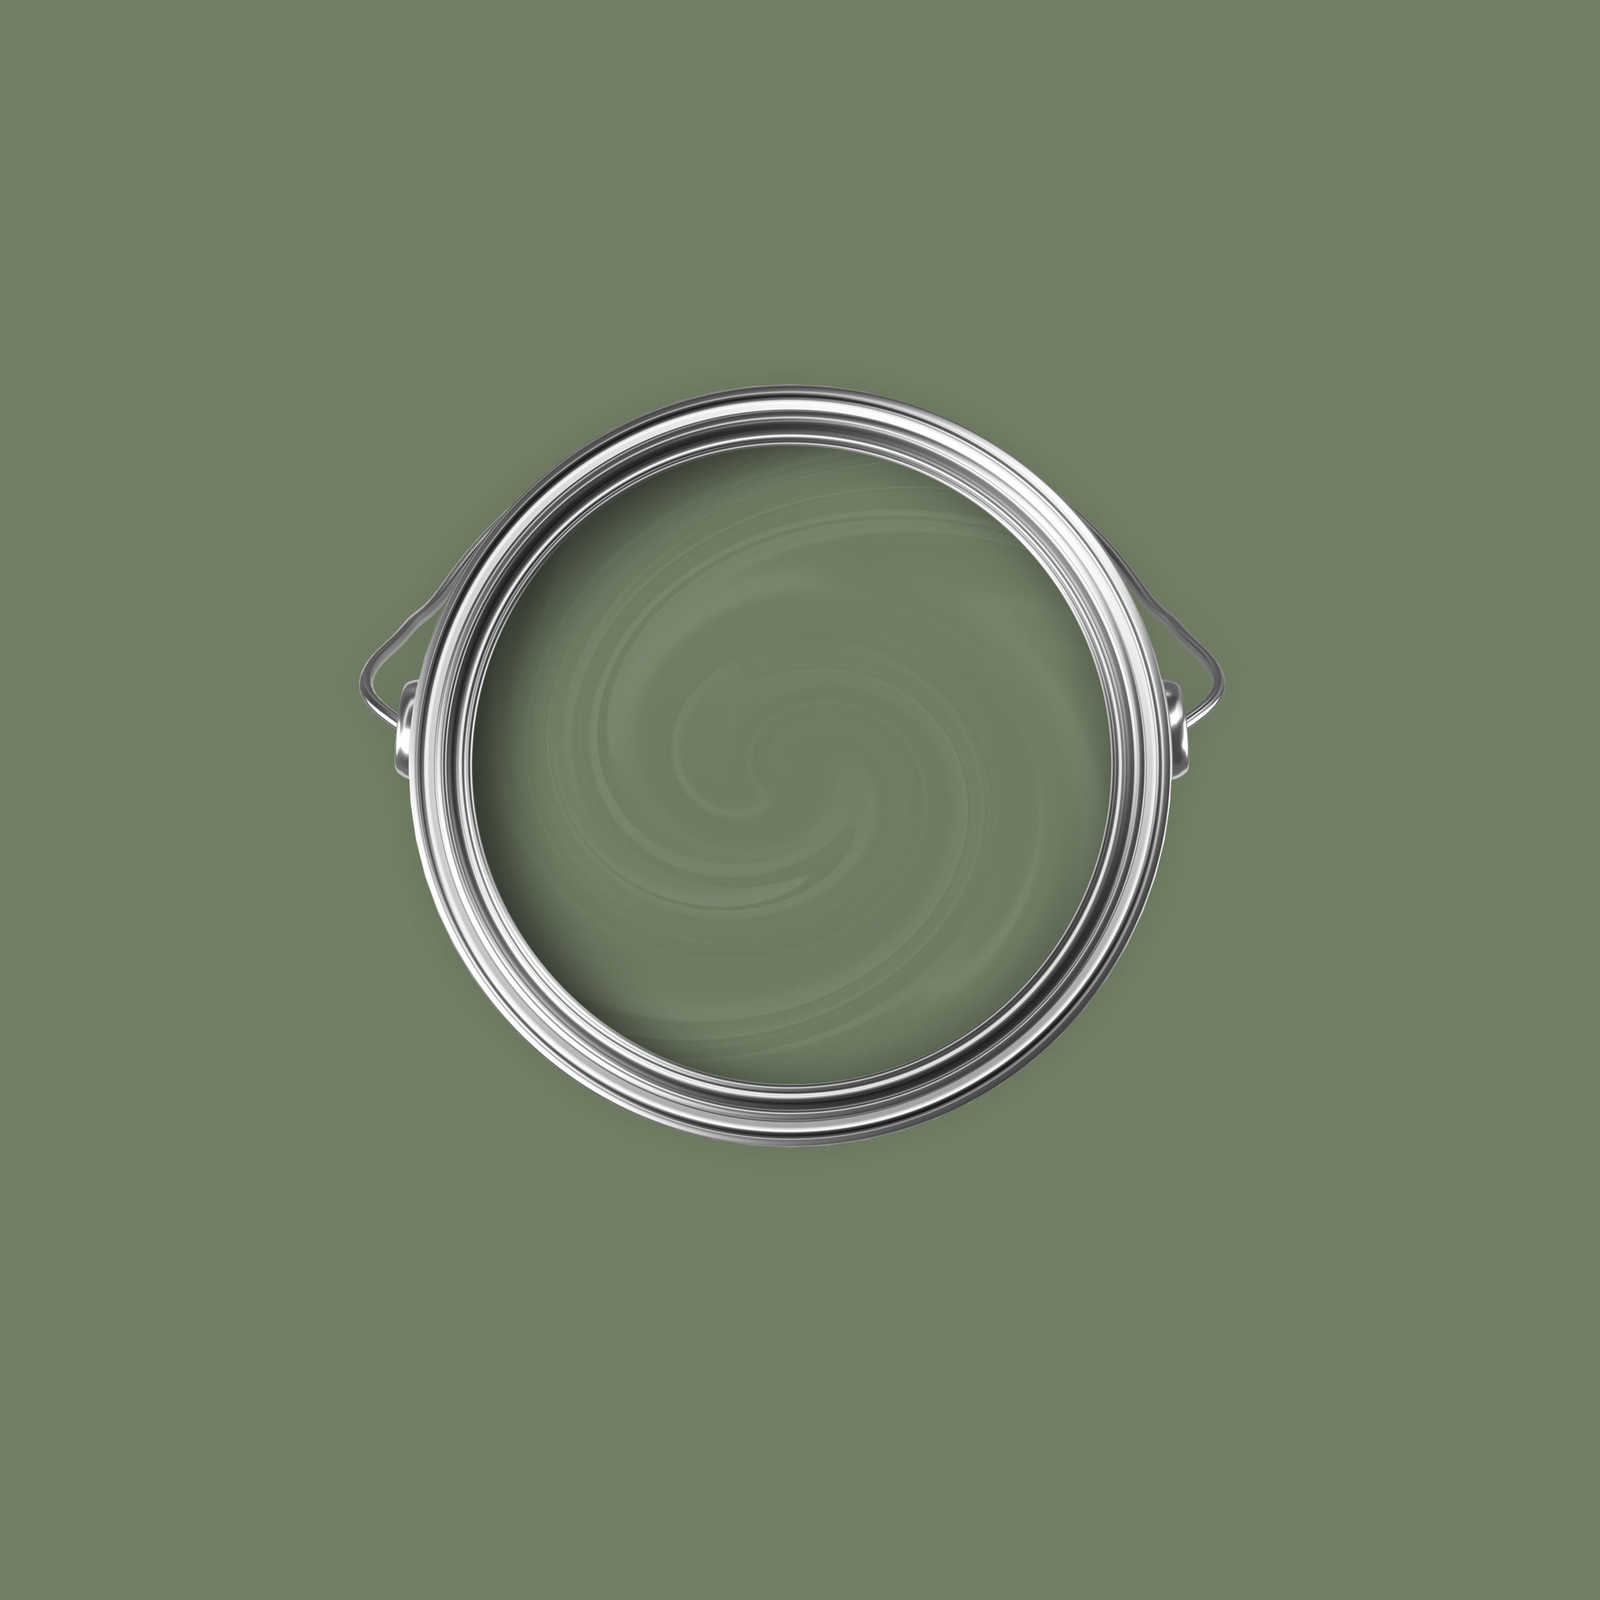             Pittura murale Premium Verde oliva rilassante »Gorgeous Green« NW504 – 2,5 litri
        